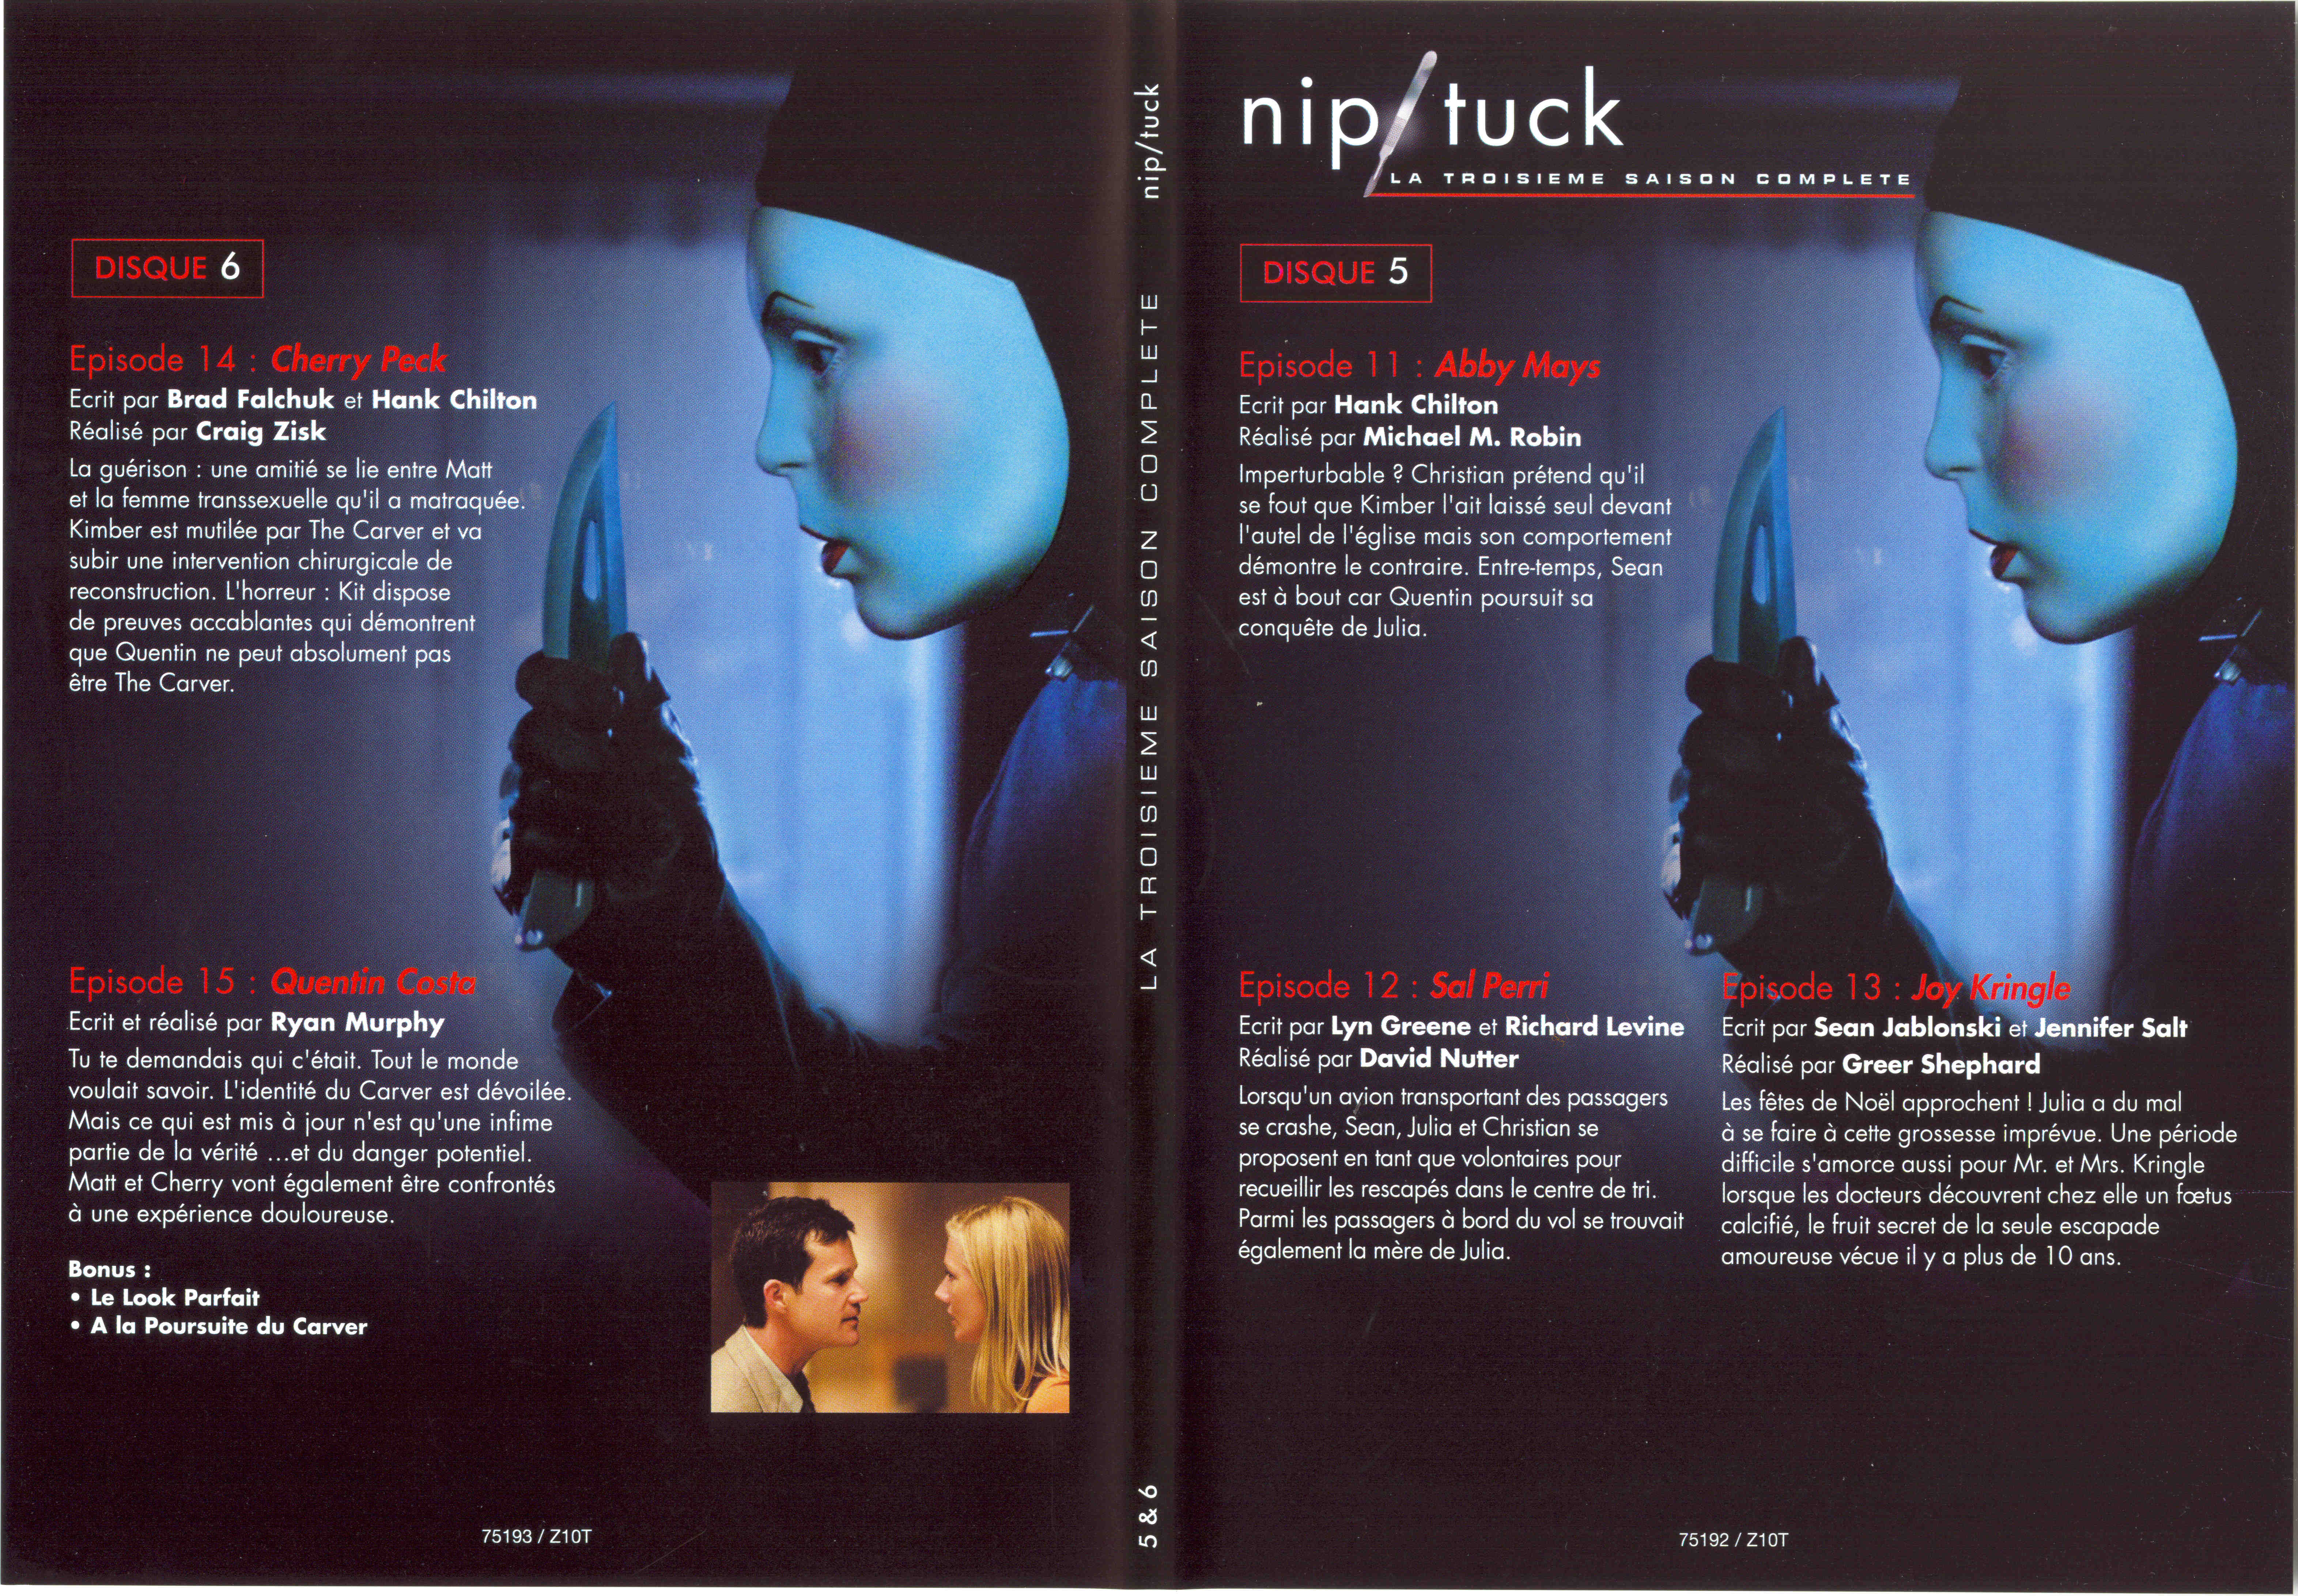 Jaquette DVD Nip-Tuck saison 3 DVD 3